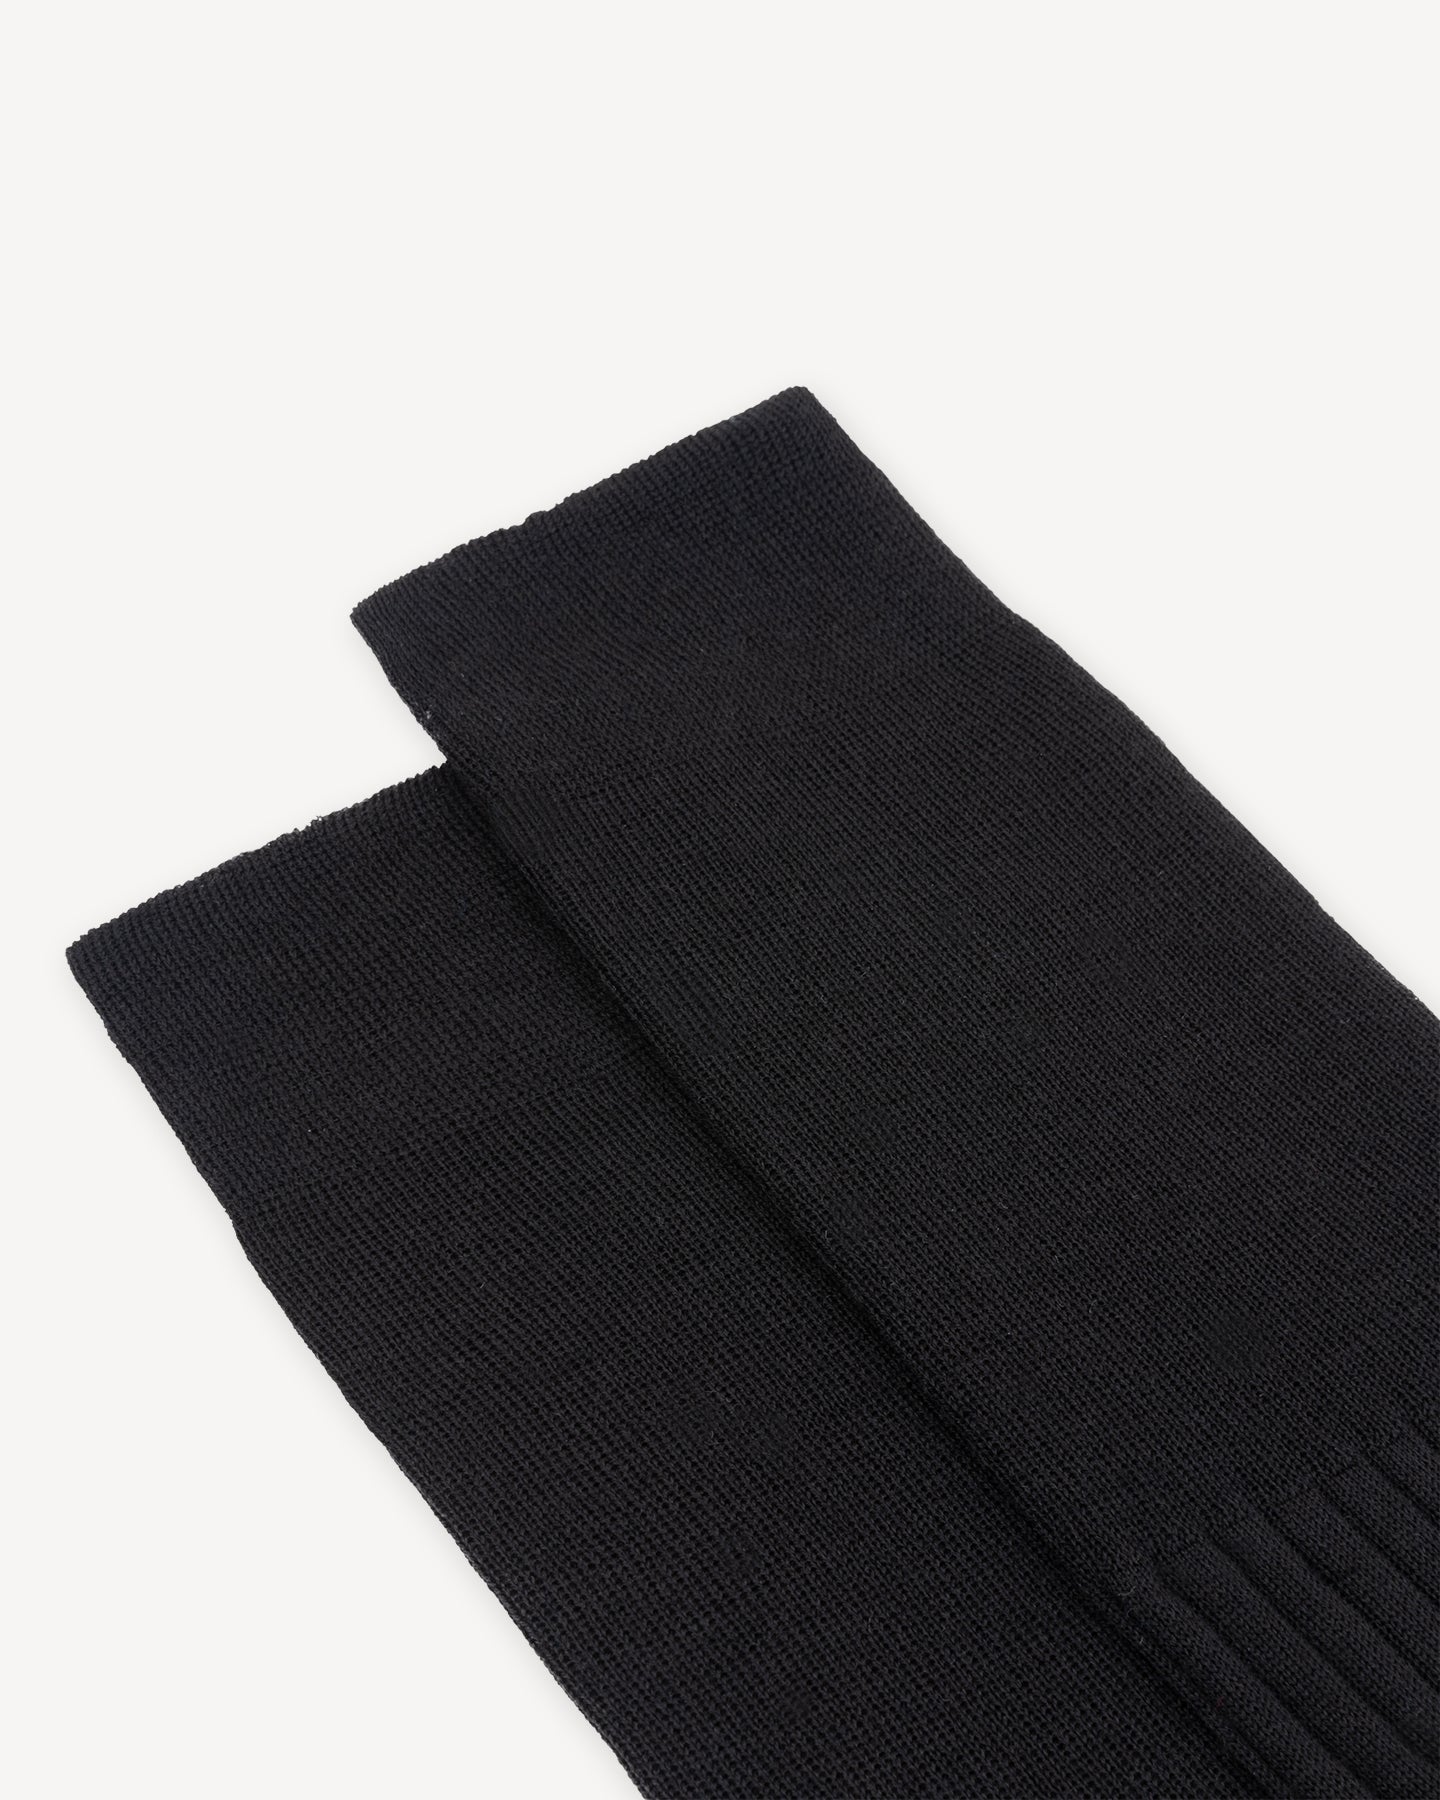 Black knee high socks made from Australian merino wool